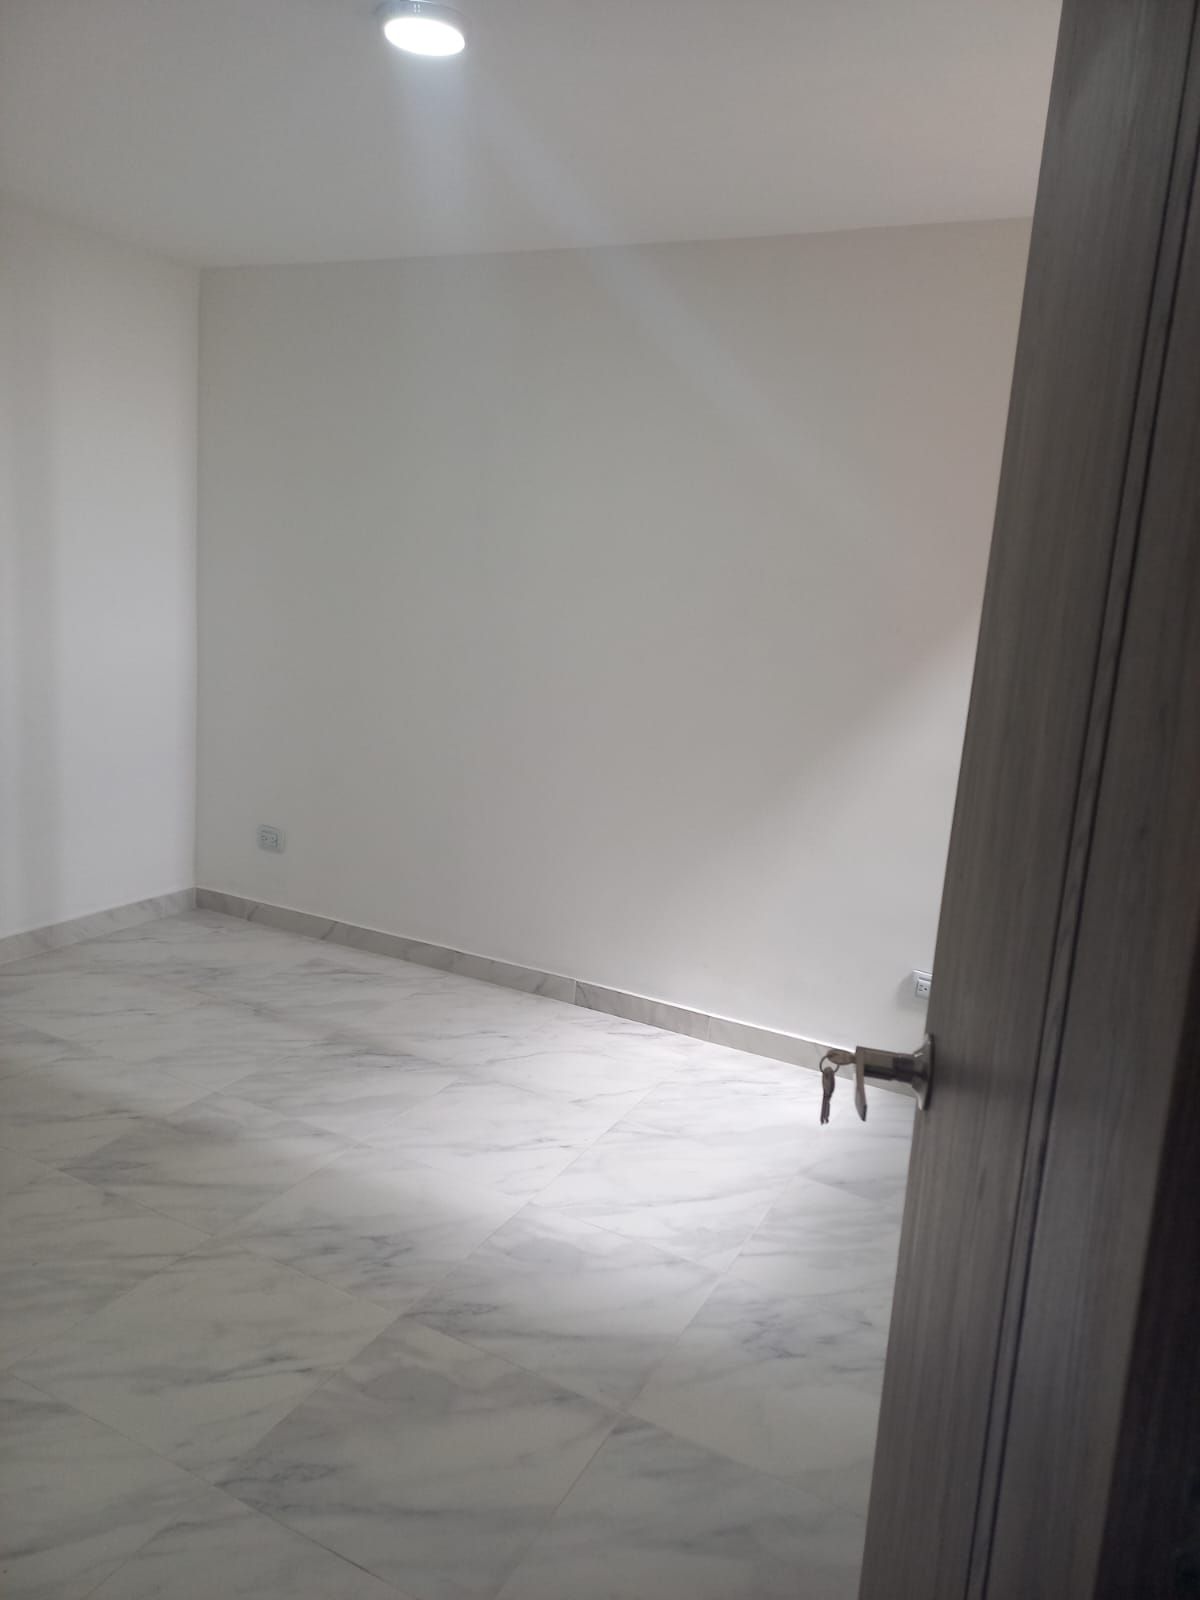 Apartamento en arriendo San Pablo Jericó 42 m² - $ 1.140.000